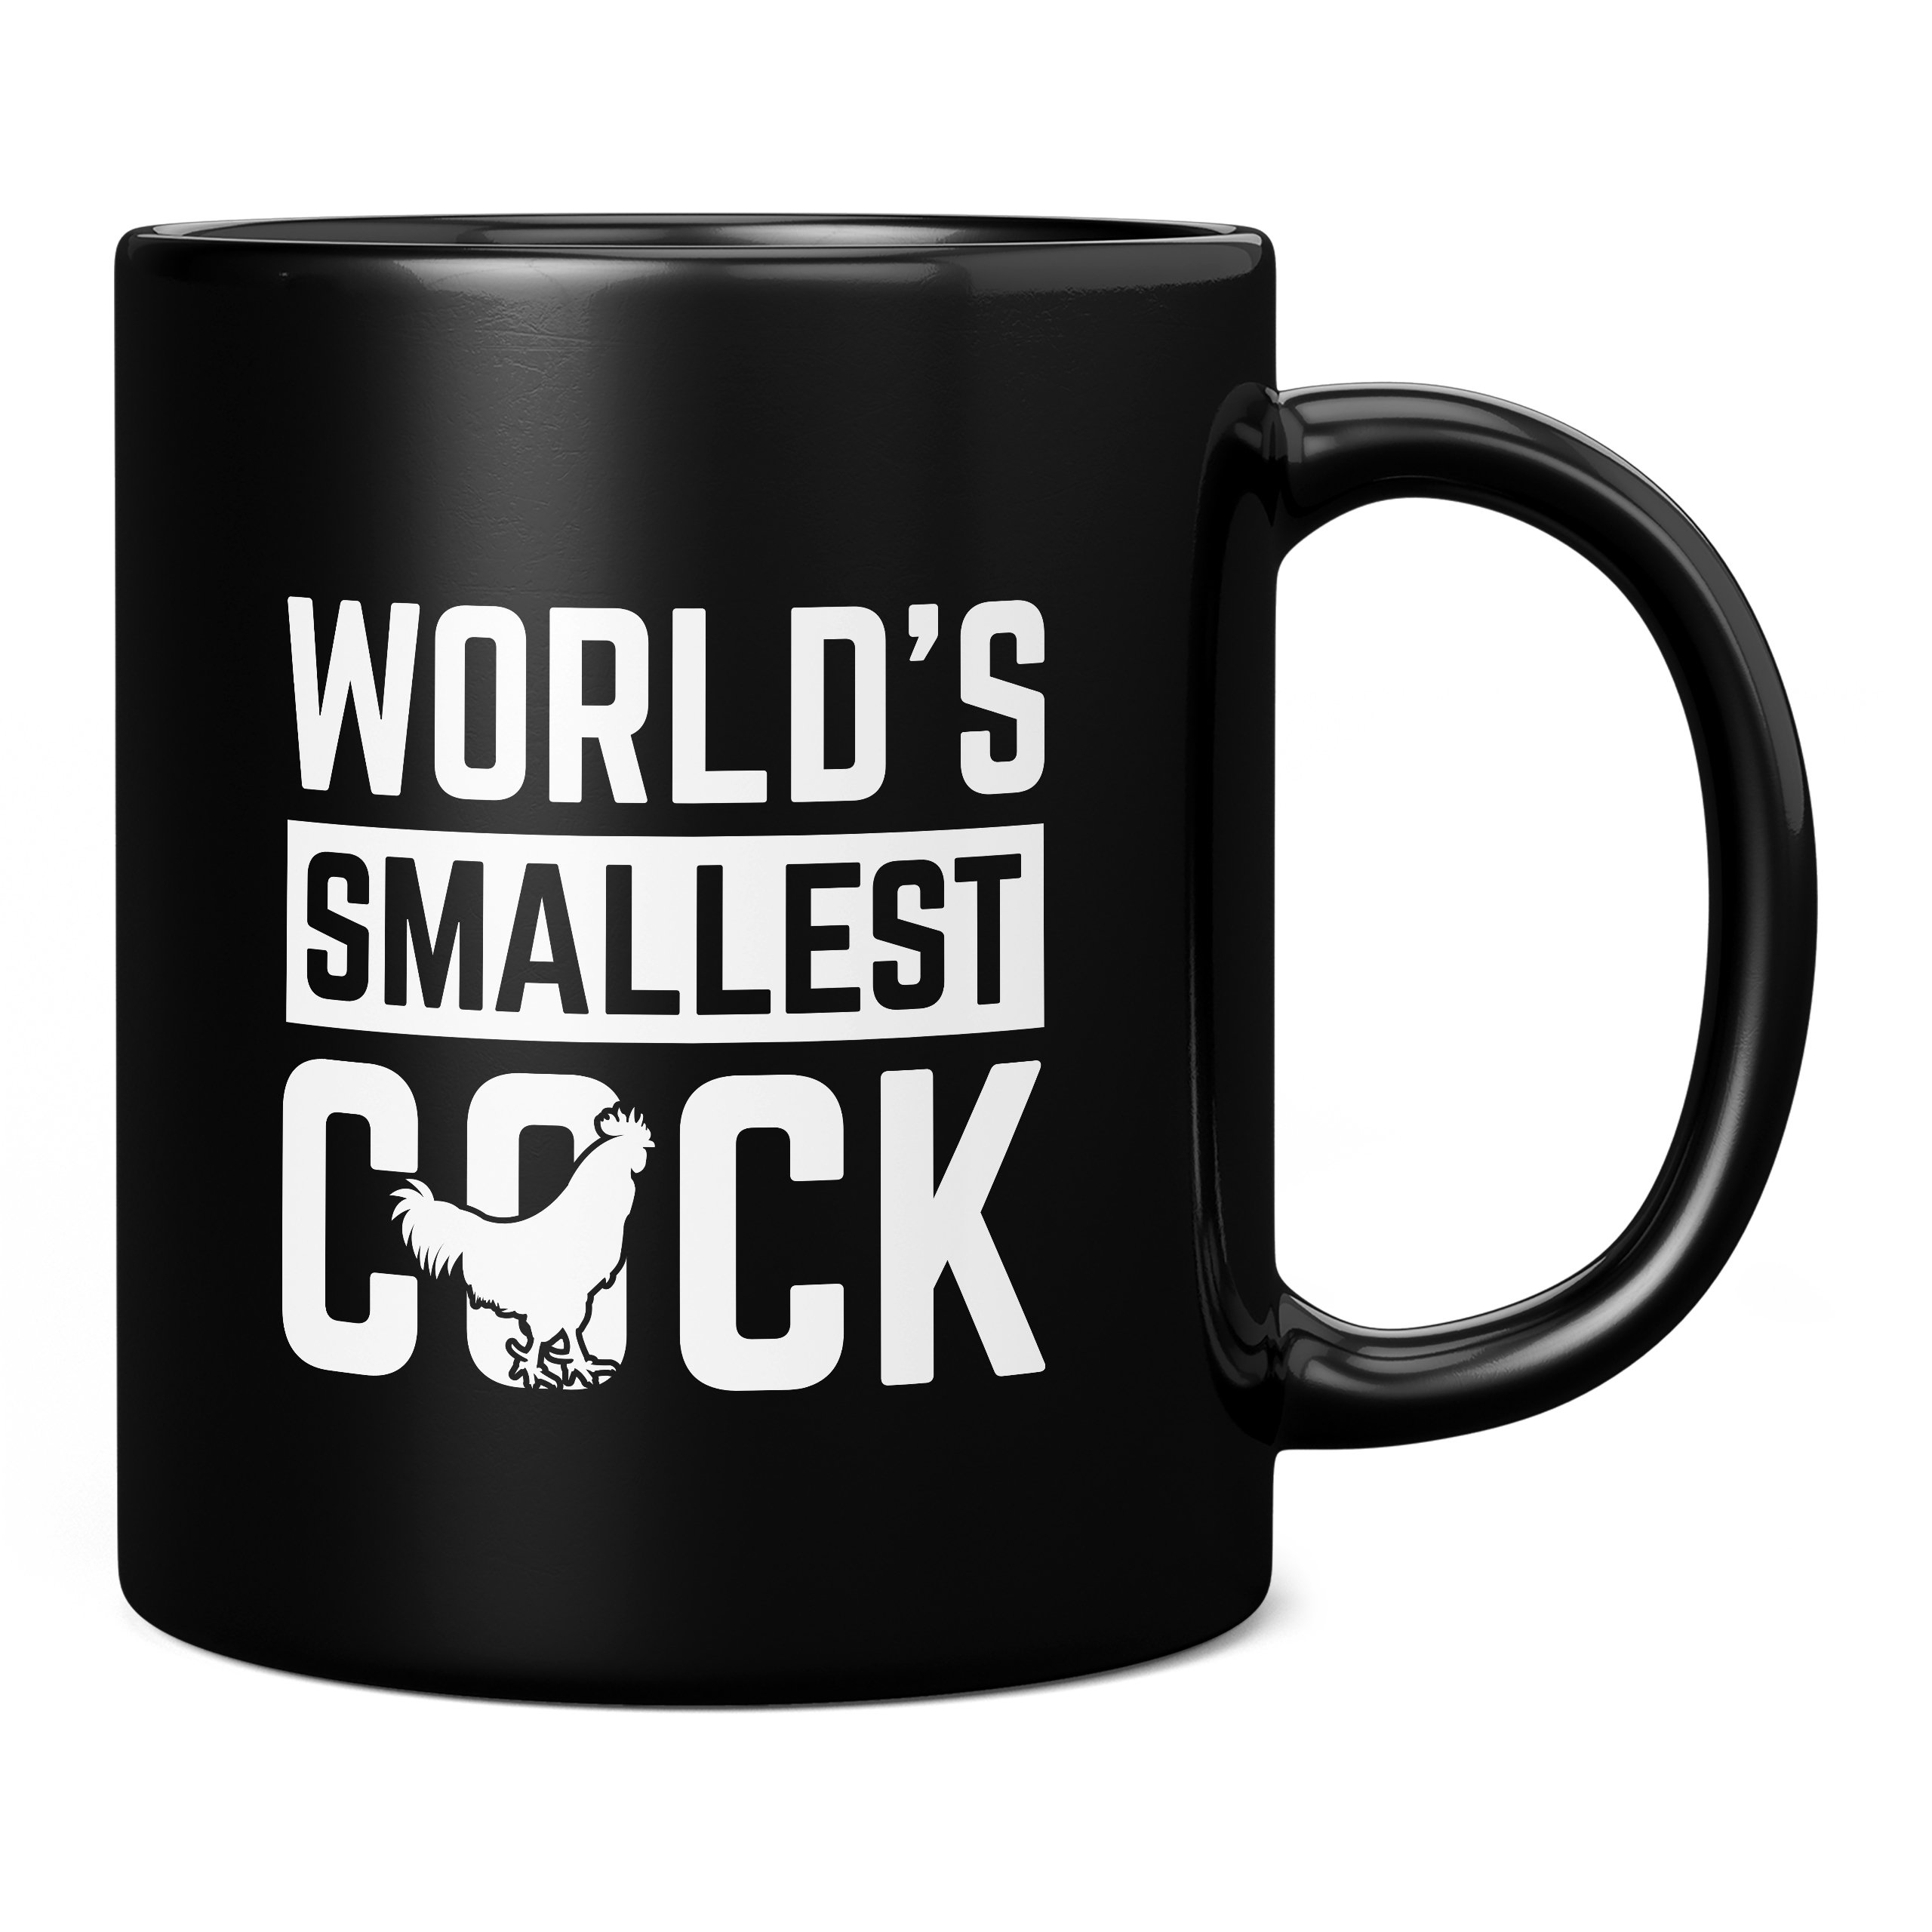 Worlds Smallest Cock Mug Coffee Cup, Rude Mugs, Funny Mug, Novelty